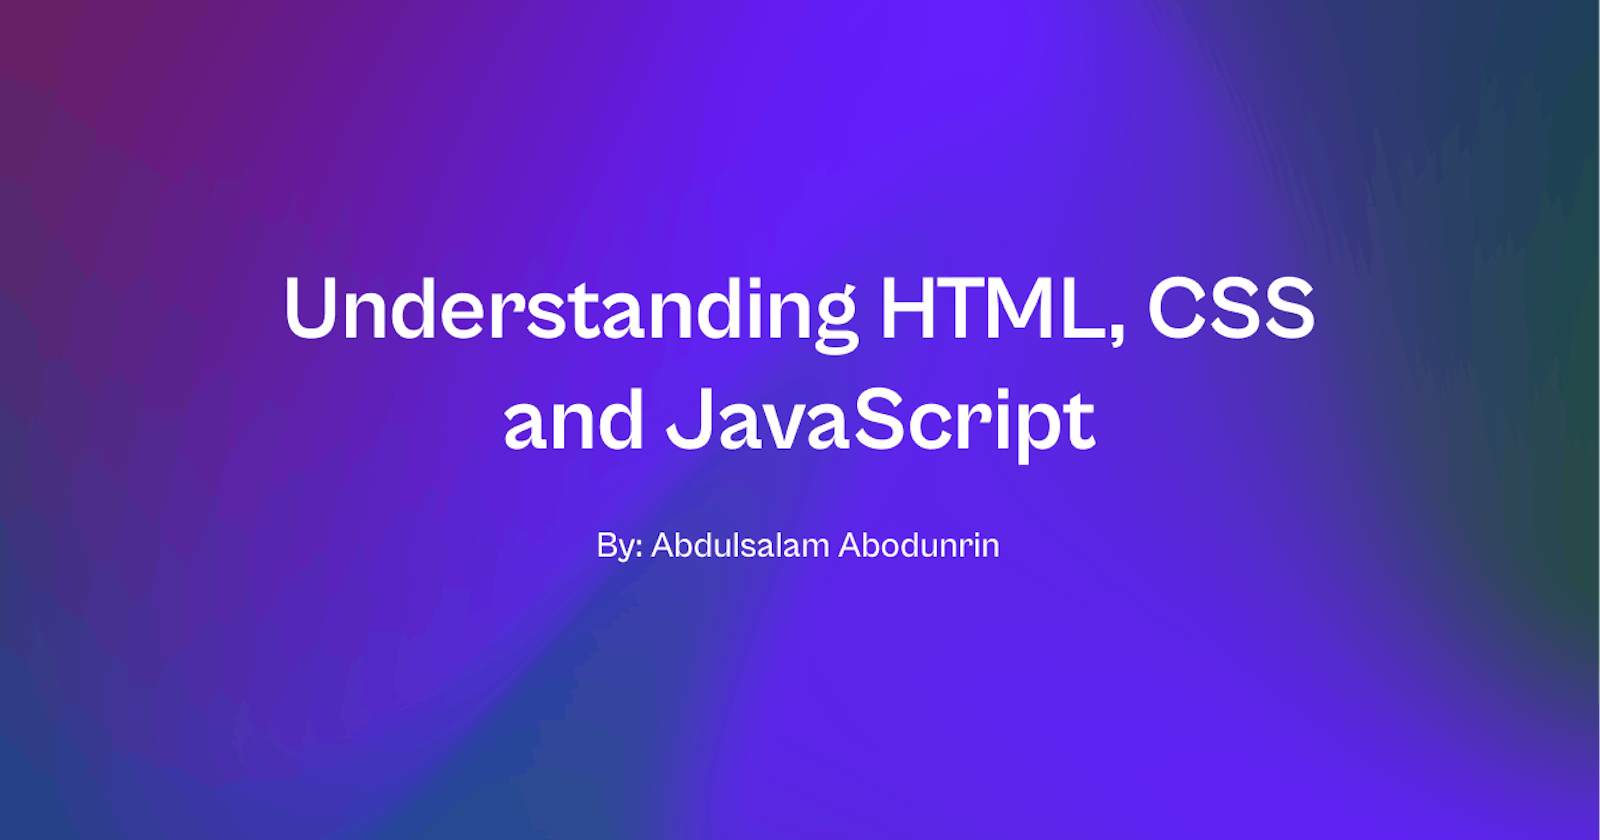 Understanding HTML, CSS and JavaScript.